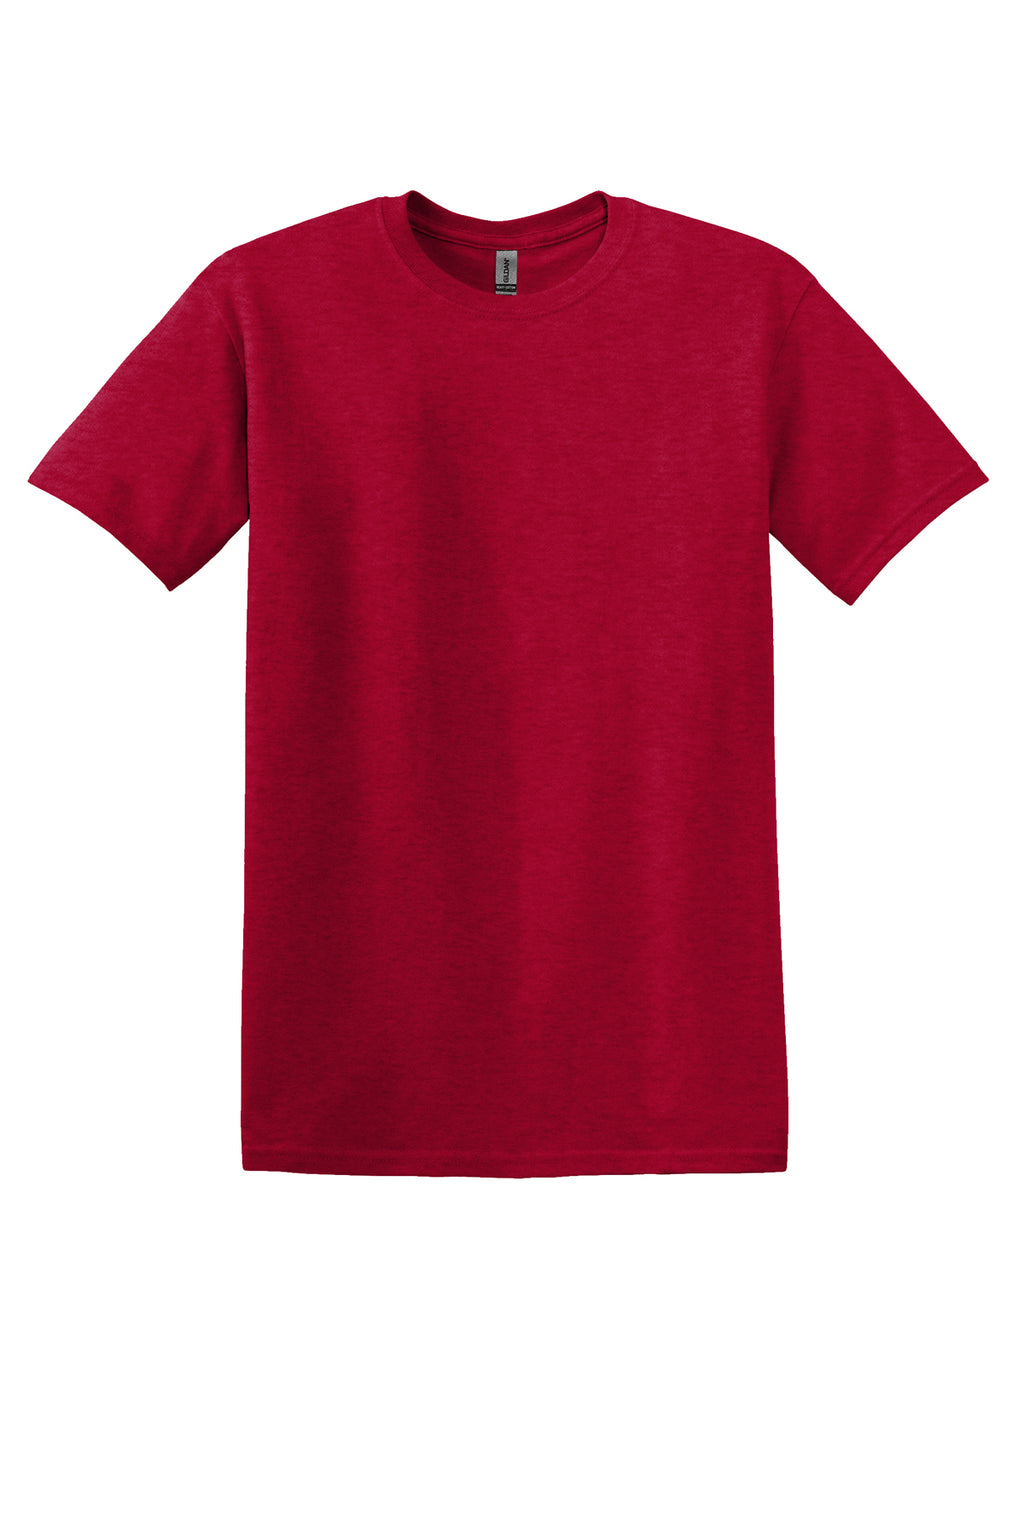 Gildan Mens/Unisex S/S Shirts Antique Cherry Red